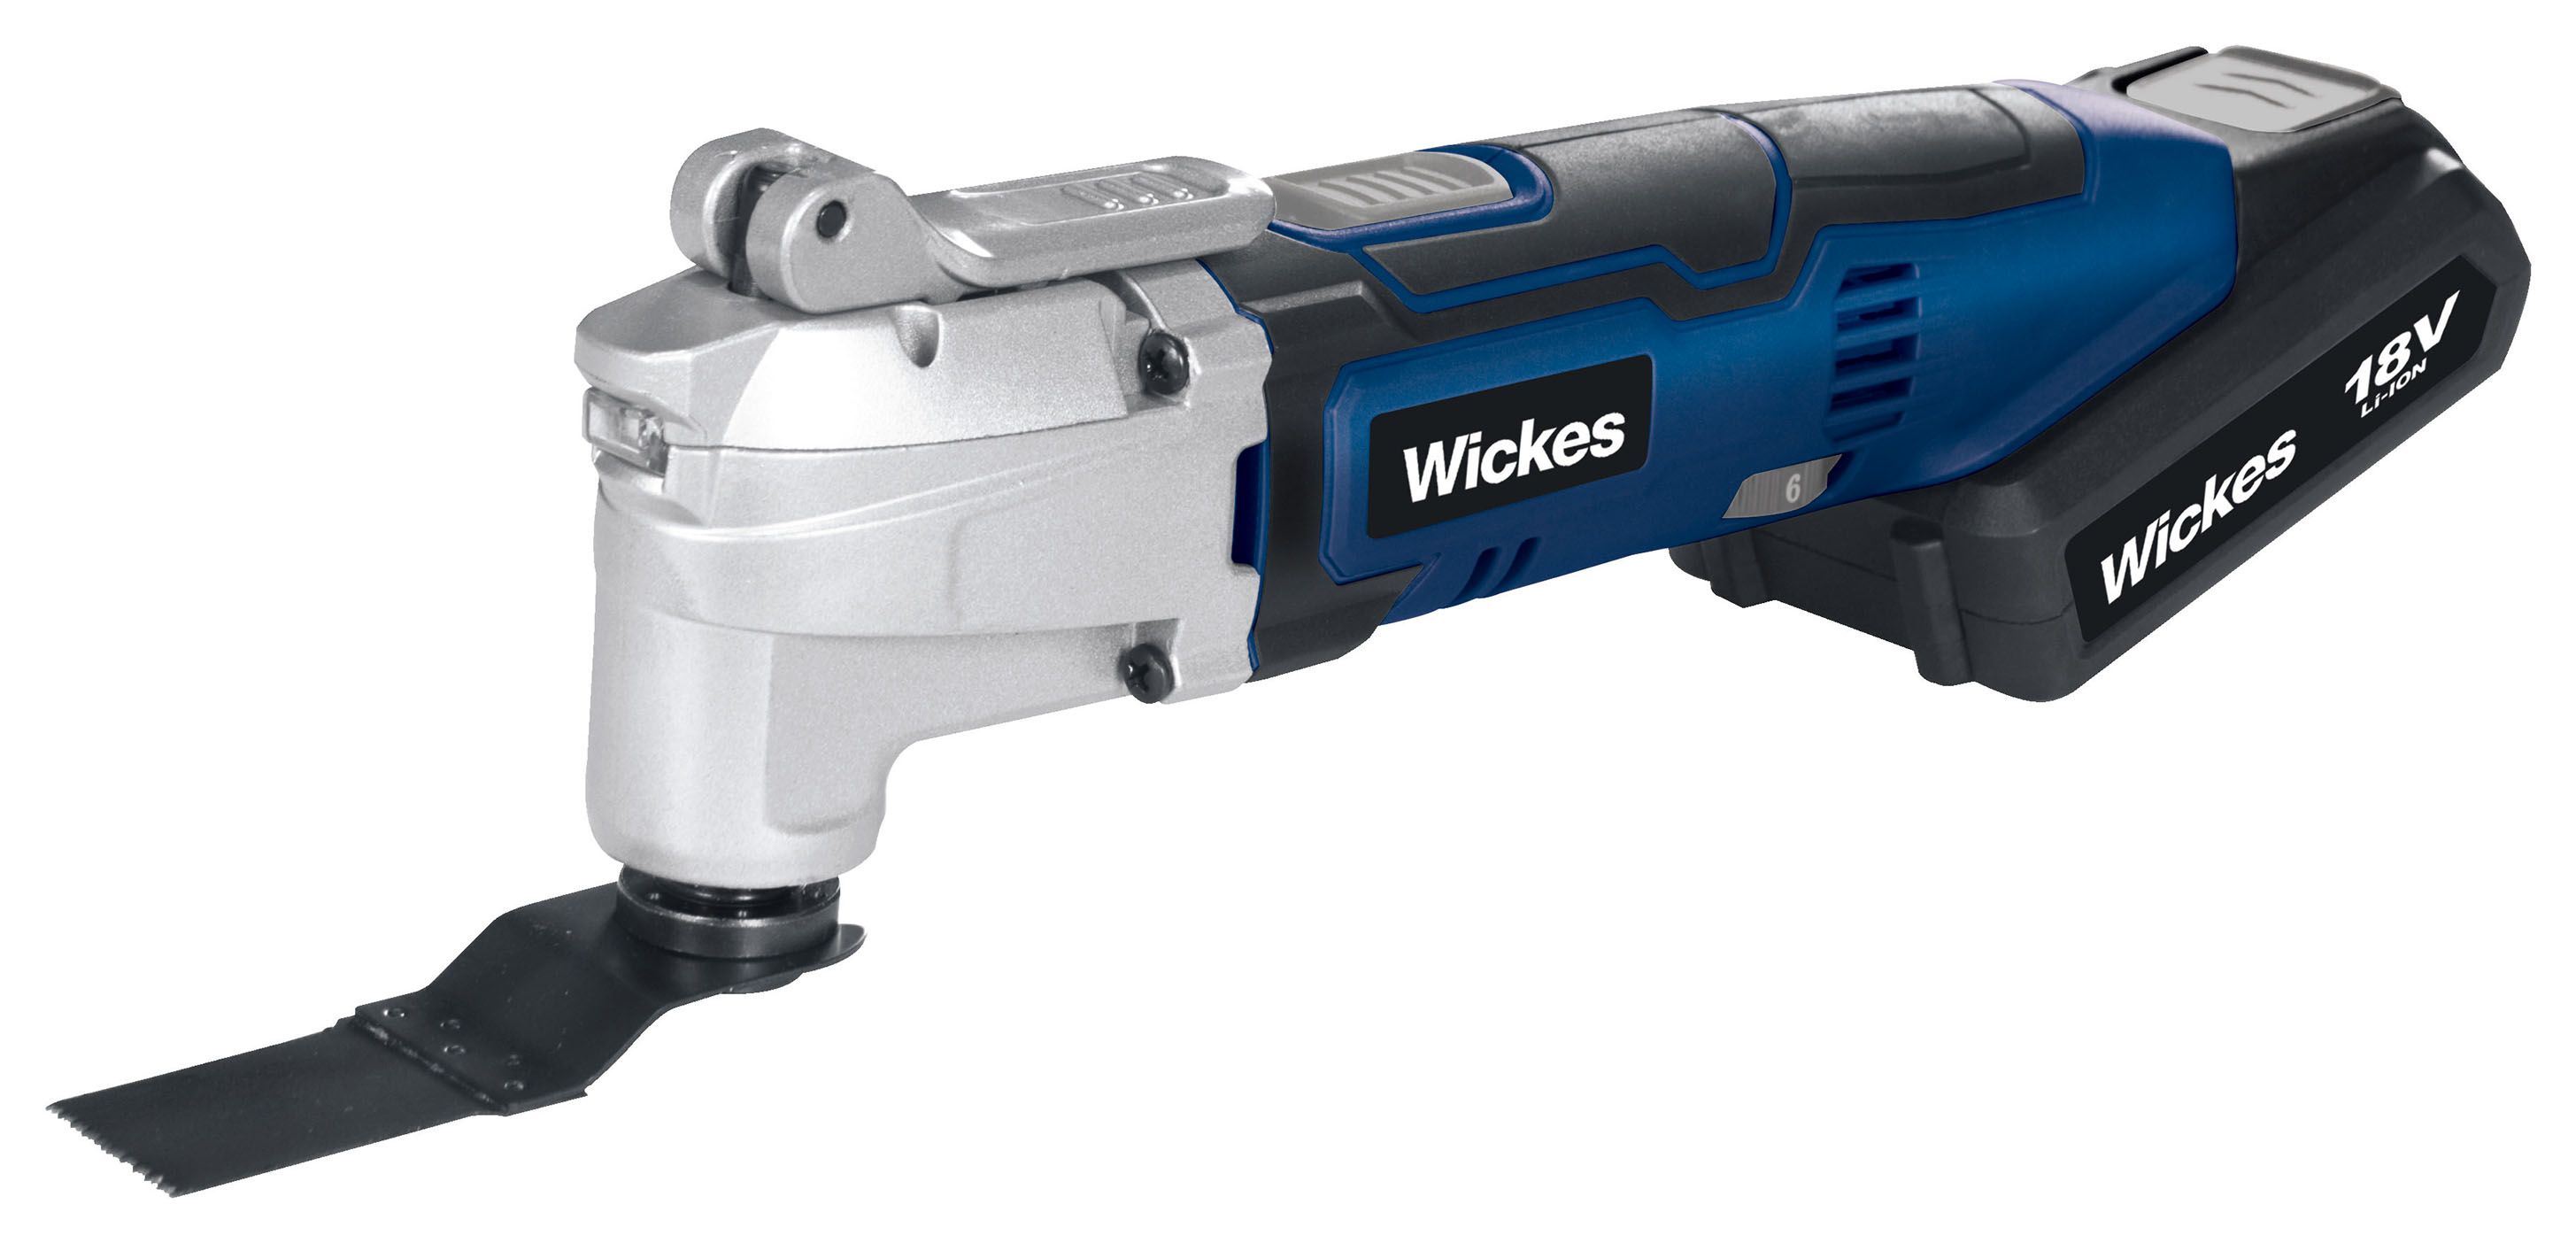 Wickes 18V 1 x 2.0Ah Li-ion Cordless Multi Tool with Accessories